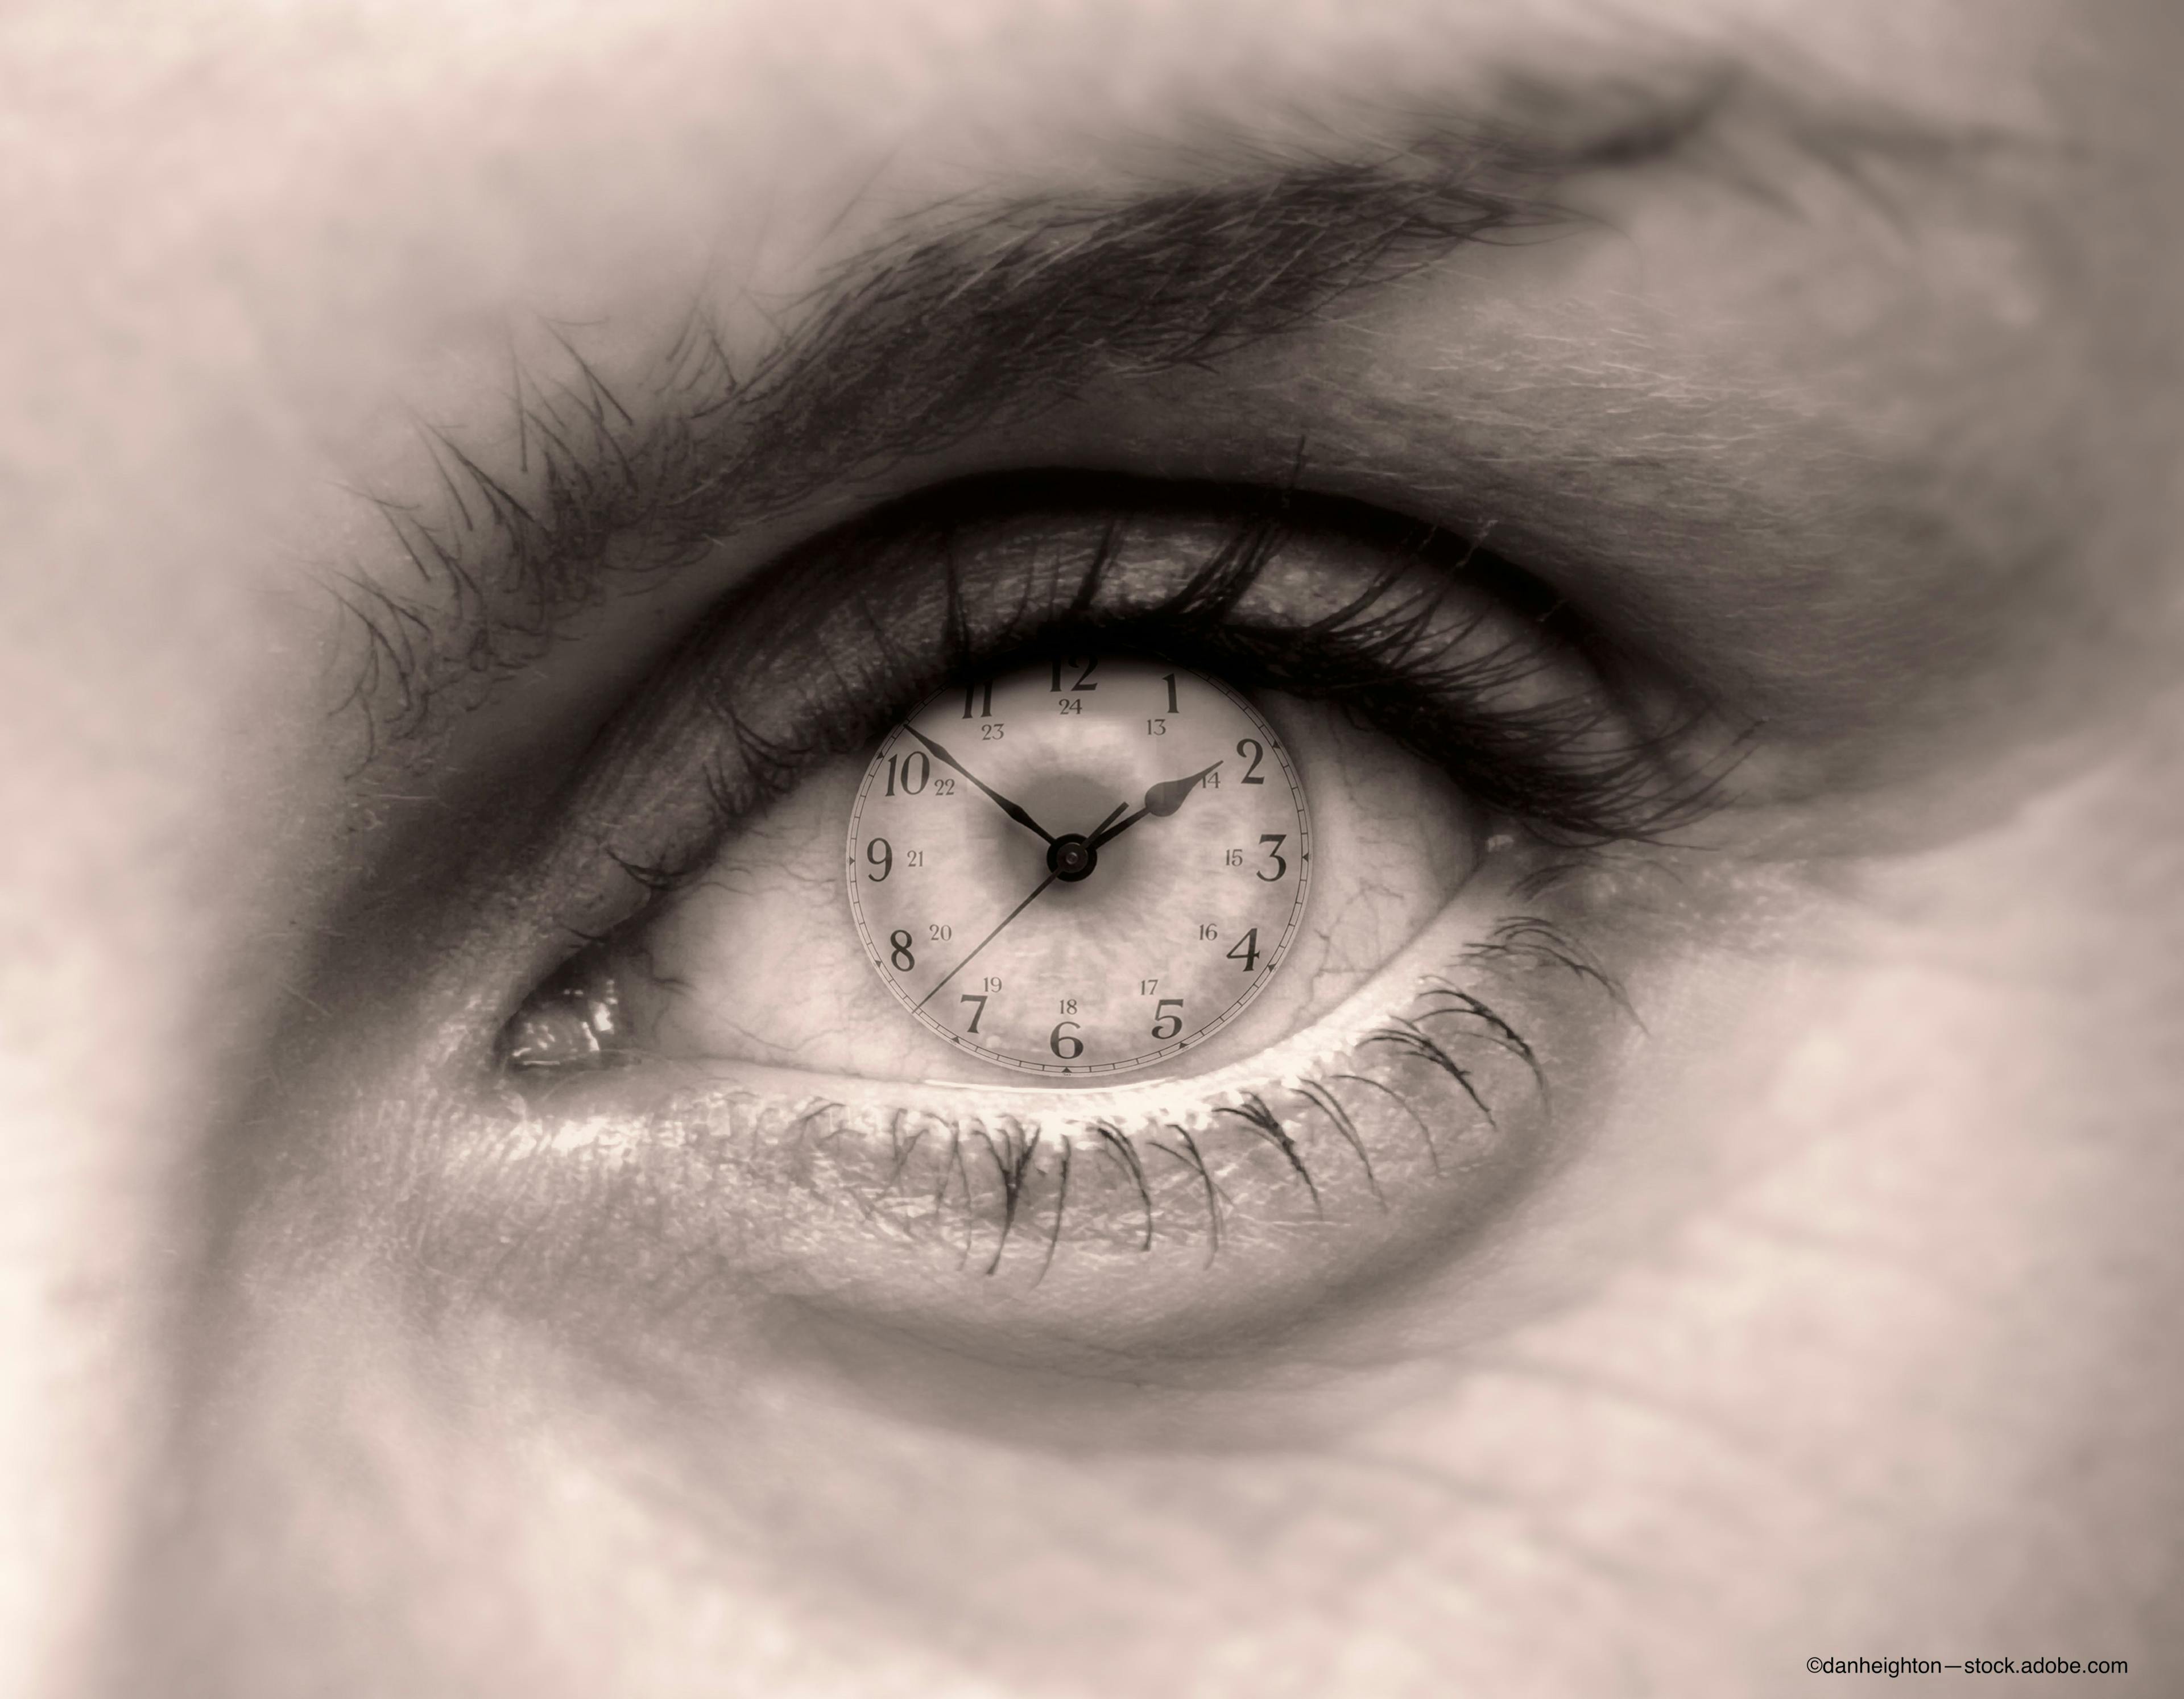 Time is retina: Focus on the ocular aspects of neuromyelitis optica